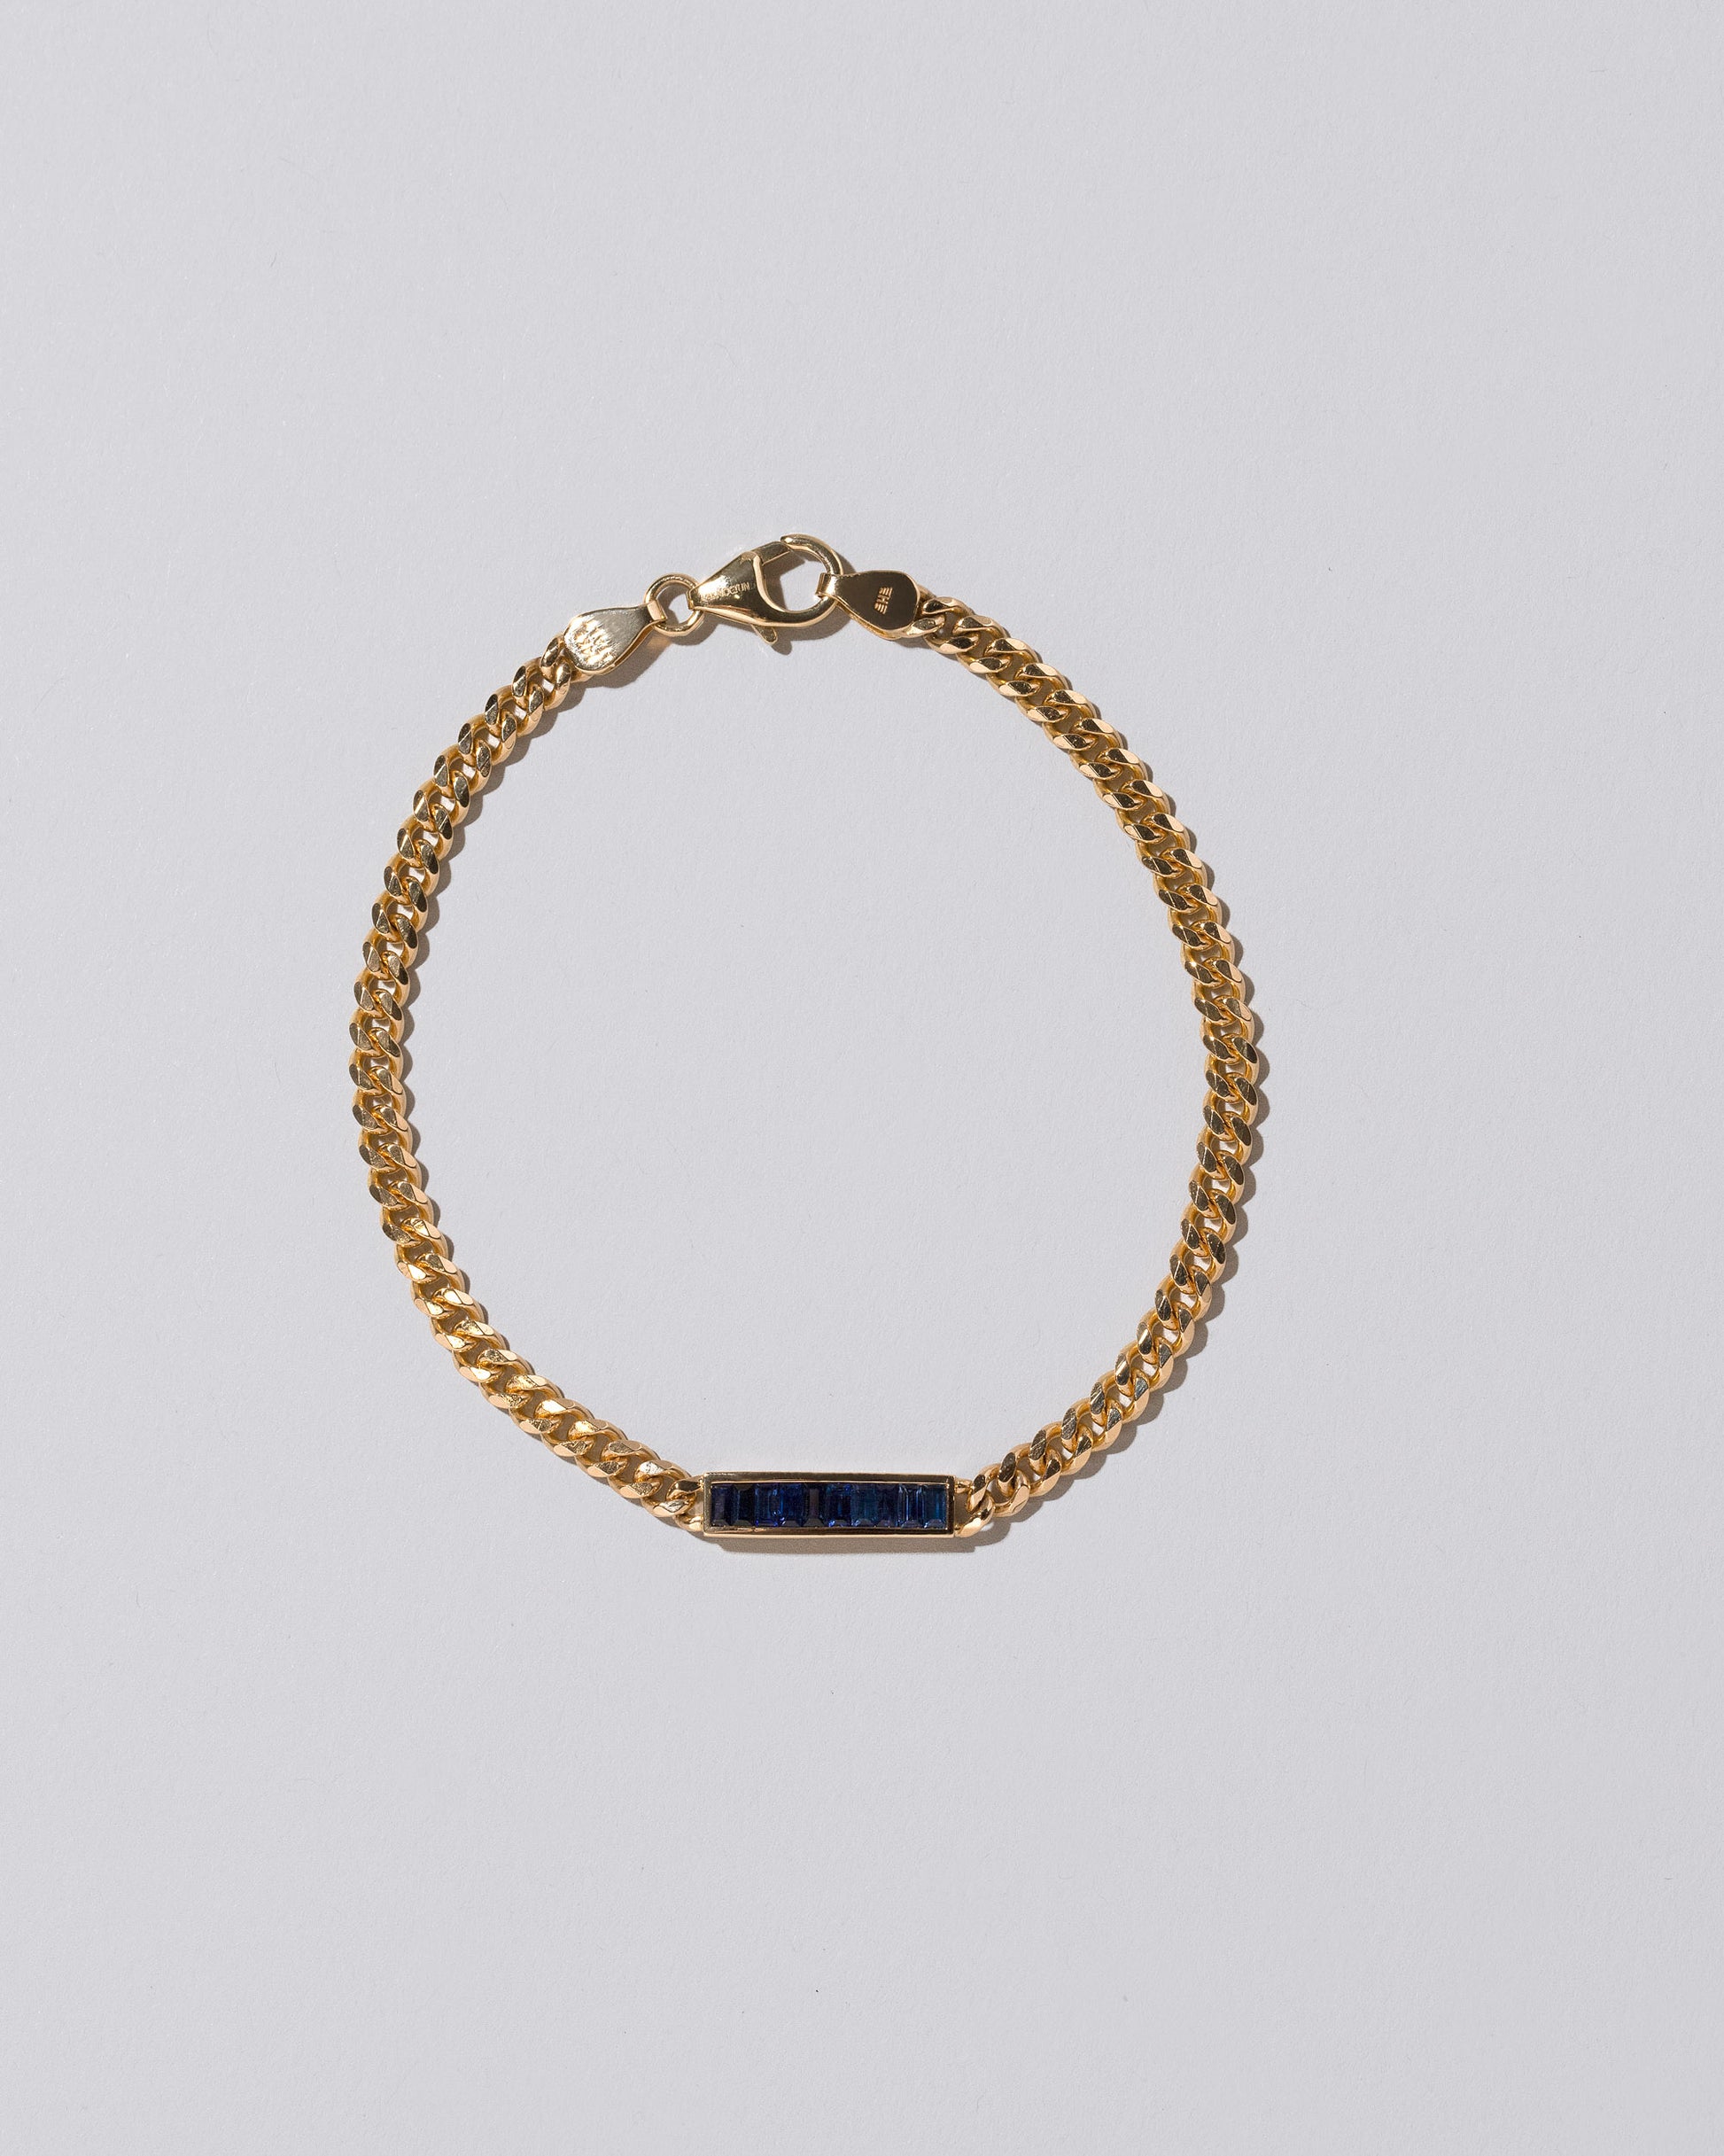 Blue Sapphire 3.4mm Identity Chain Bracelet on light color background.